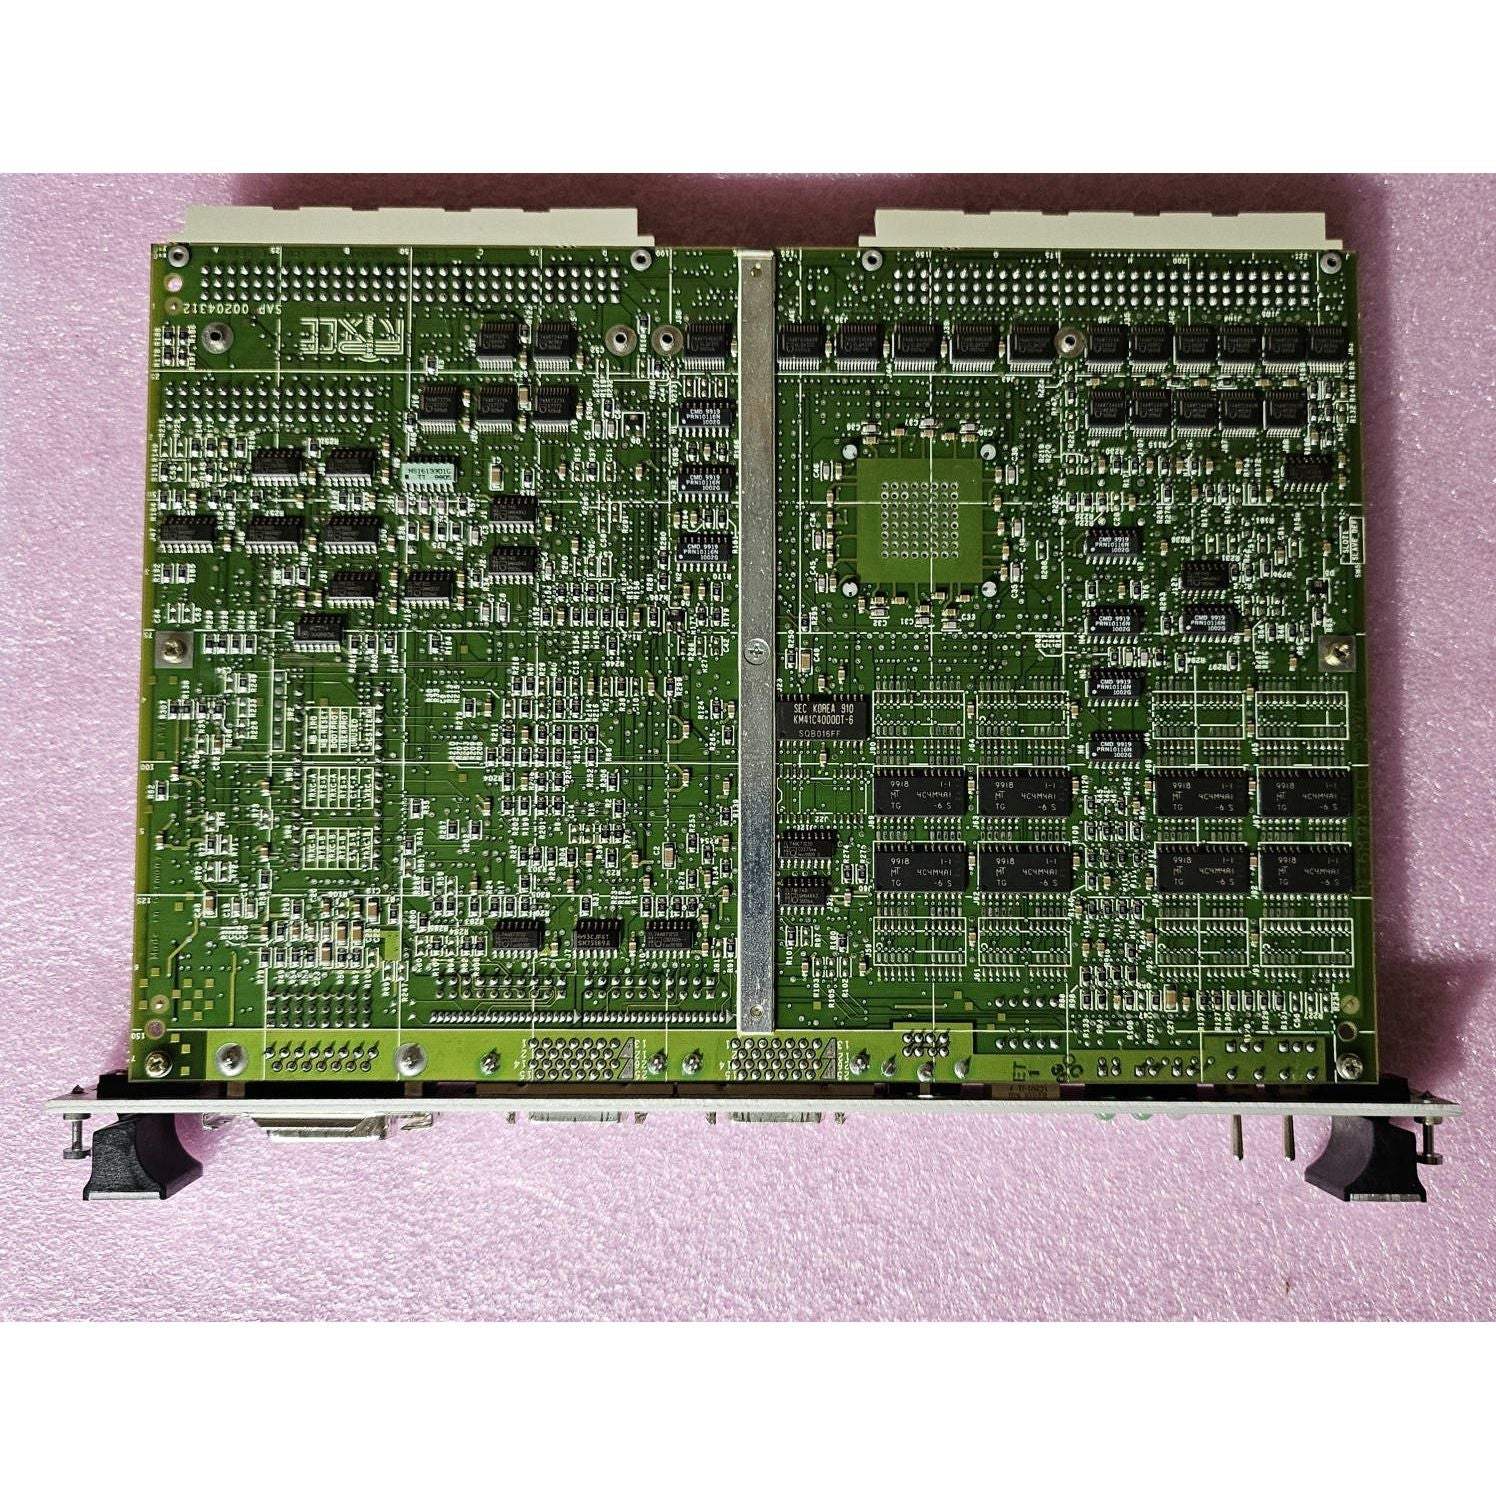 CPU-3CE / 32-40-1 |力计算机